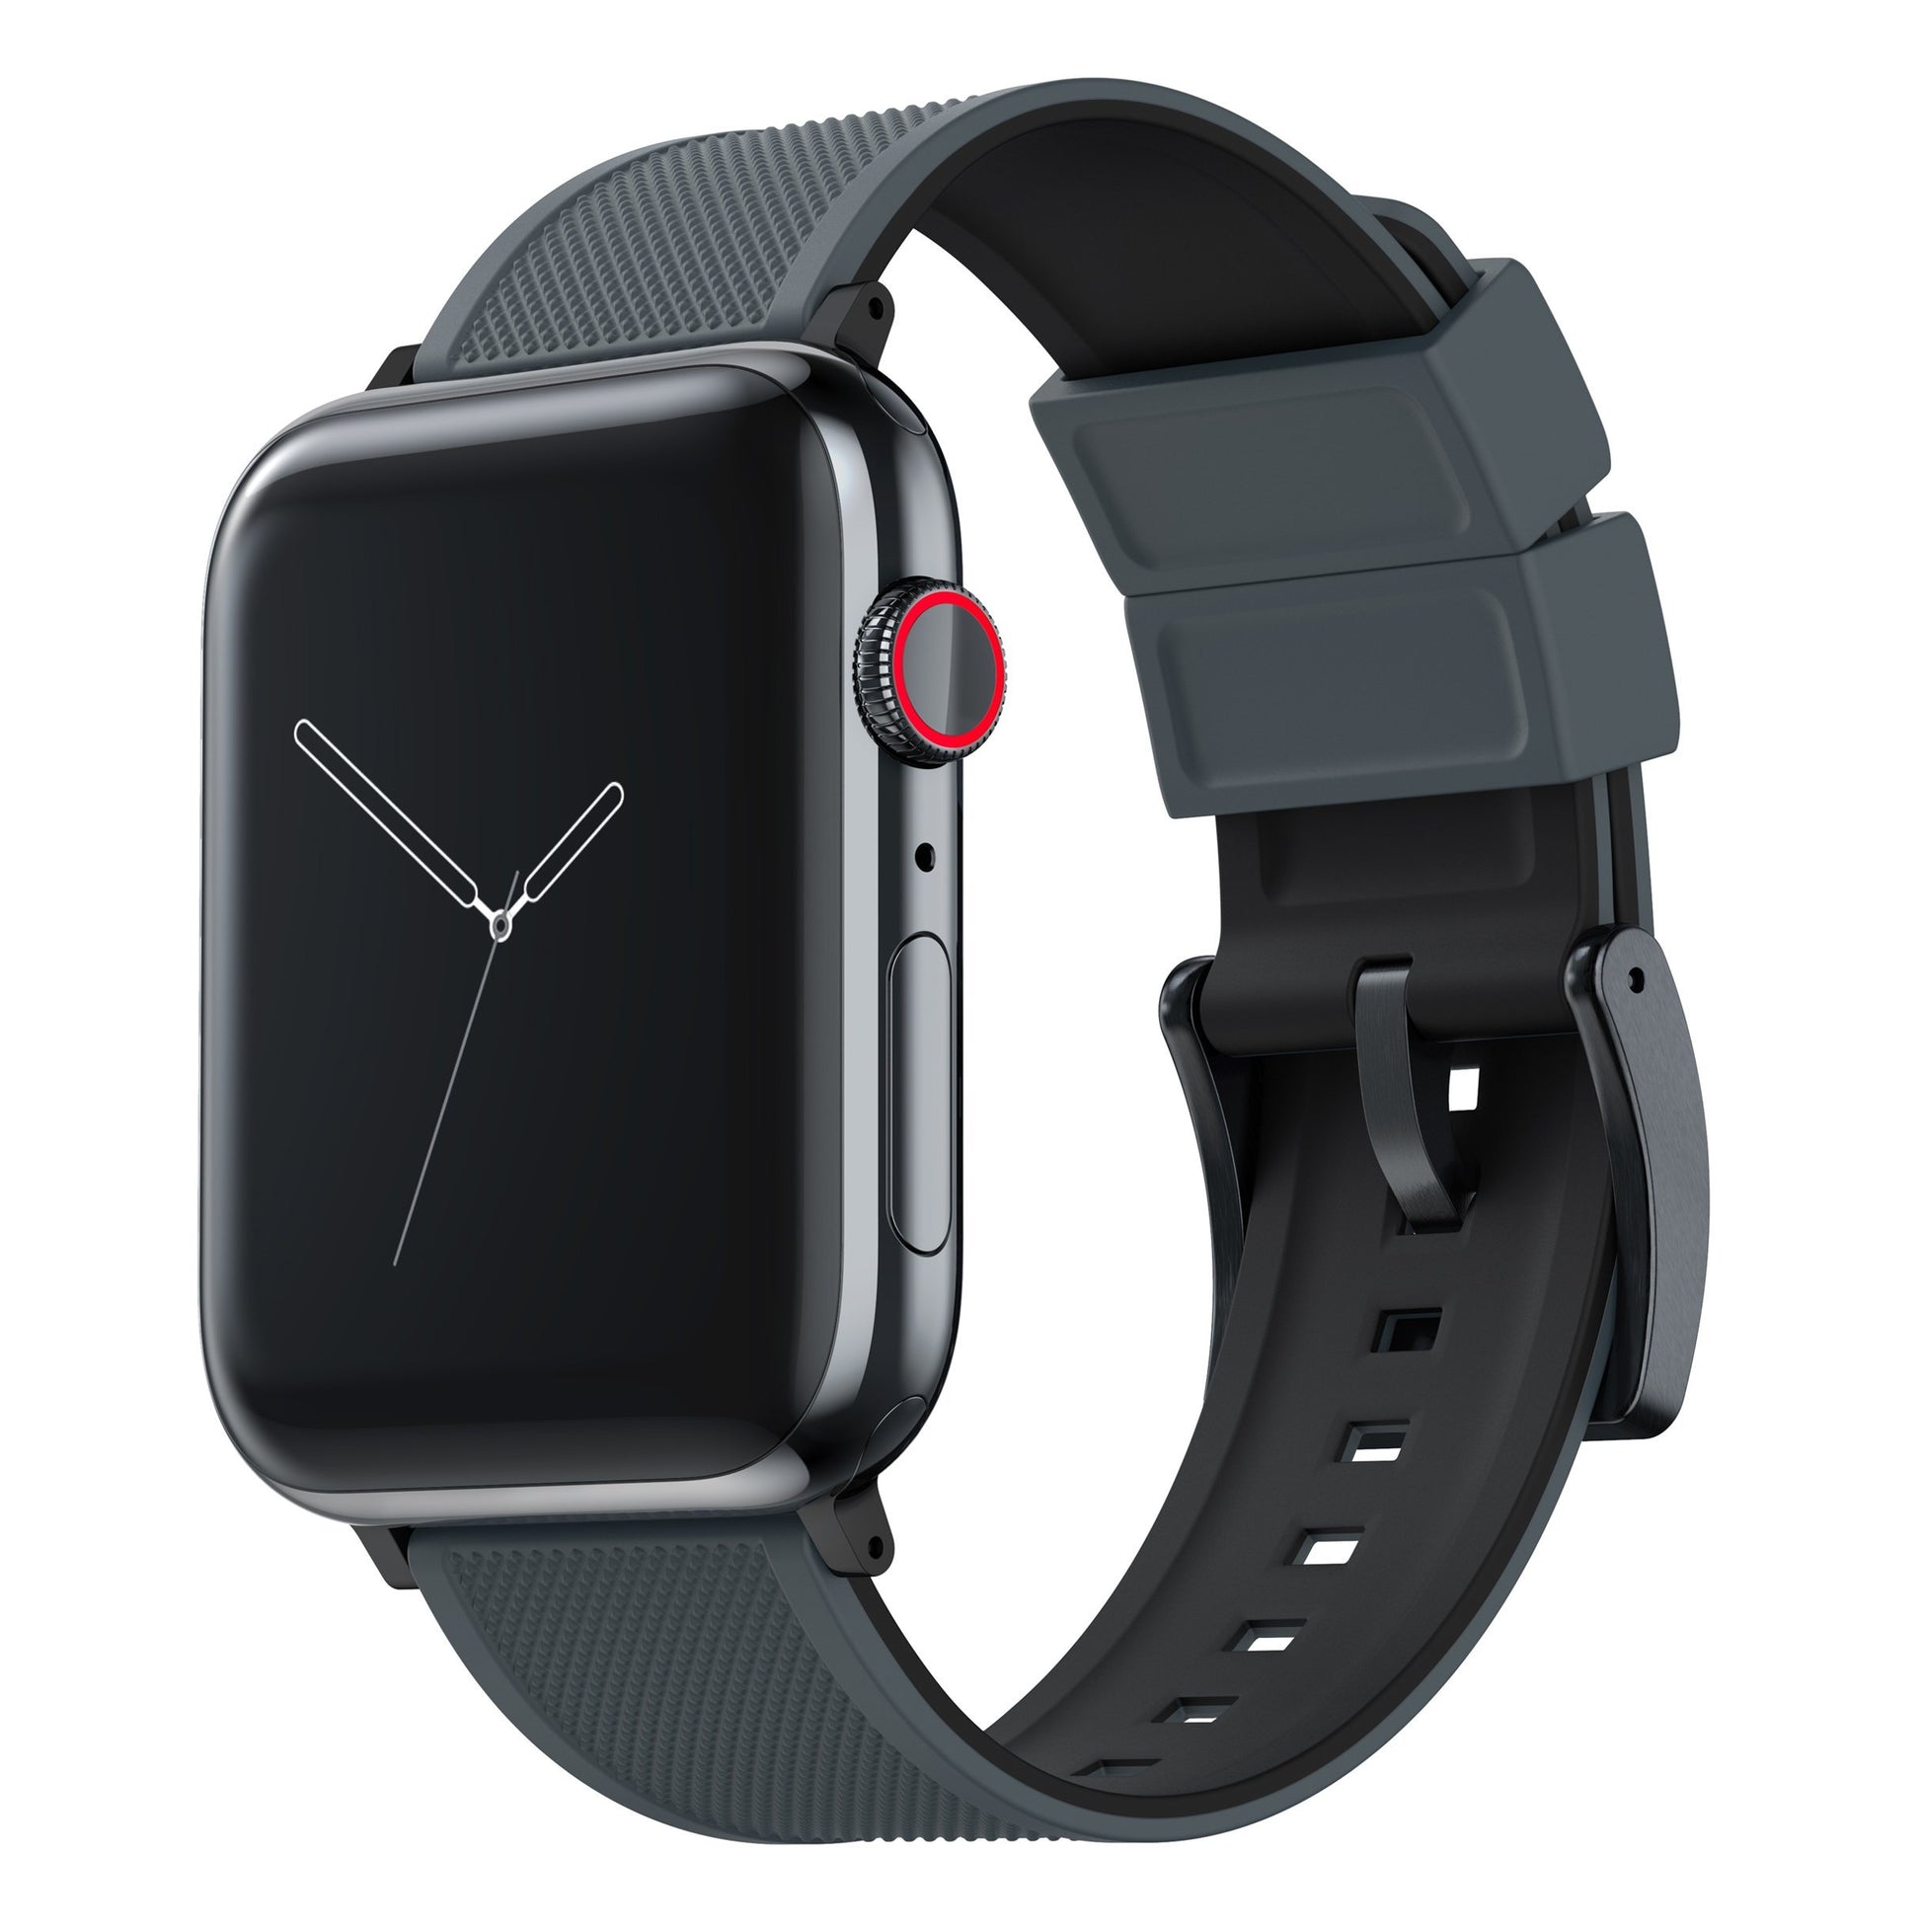 Apple Watch | Elite Silicone | Smoke Grey Top / Black Bottom - Barton Watch Bands